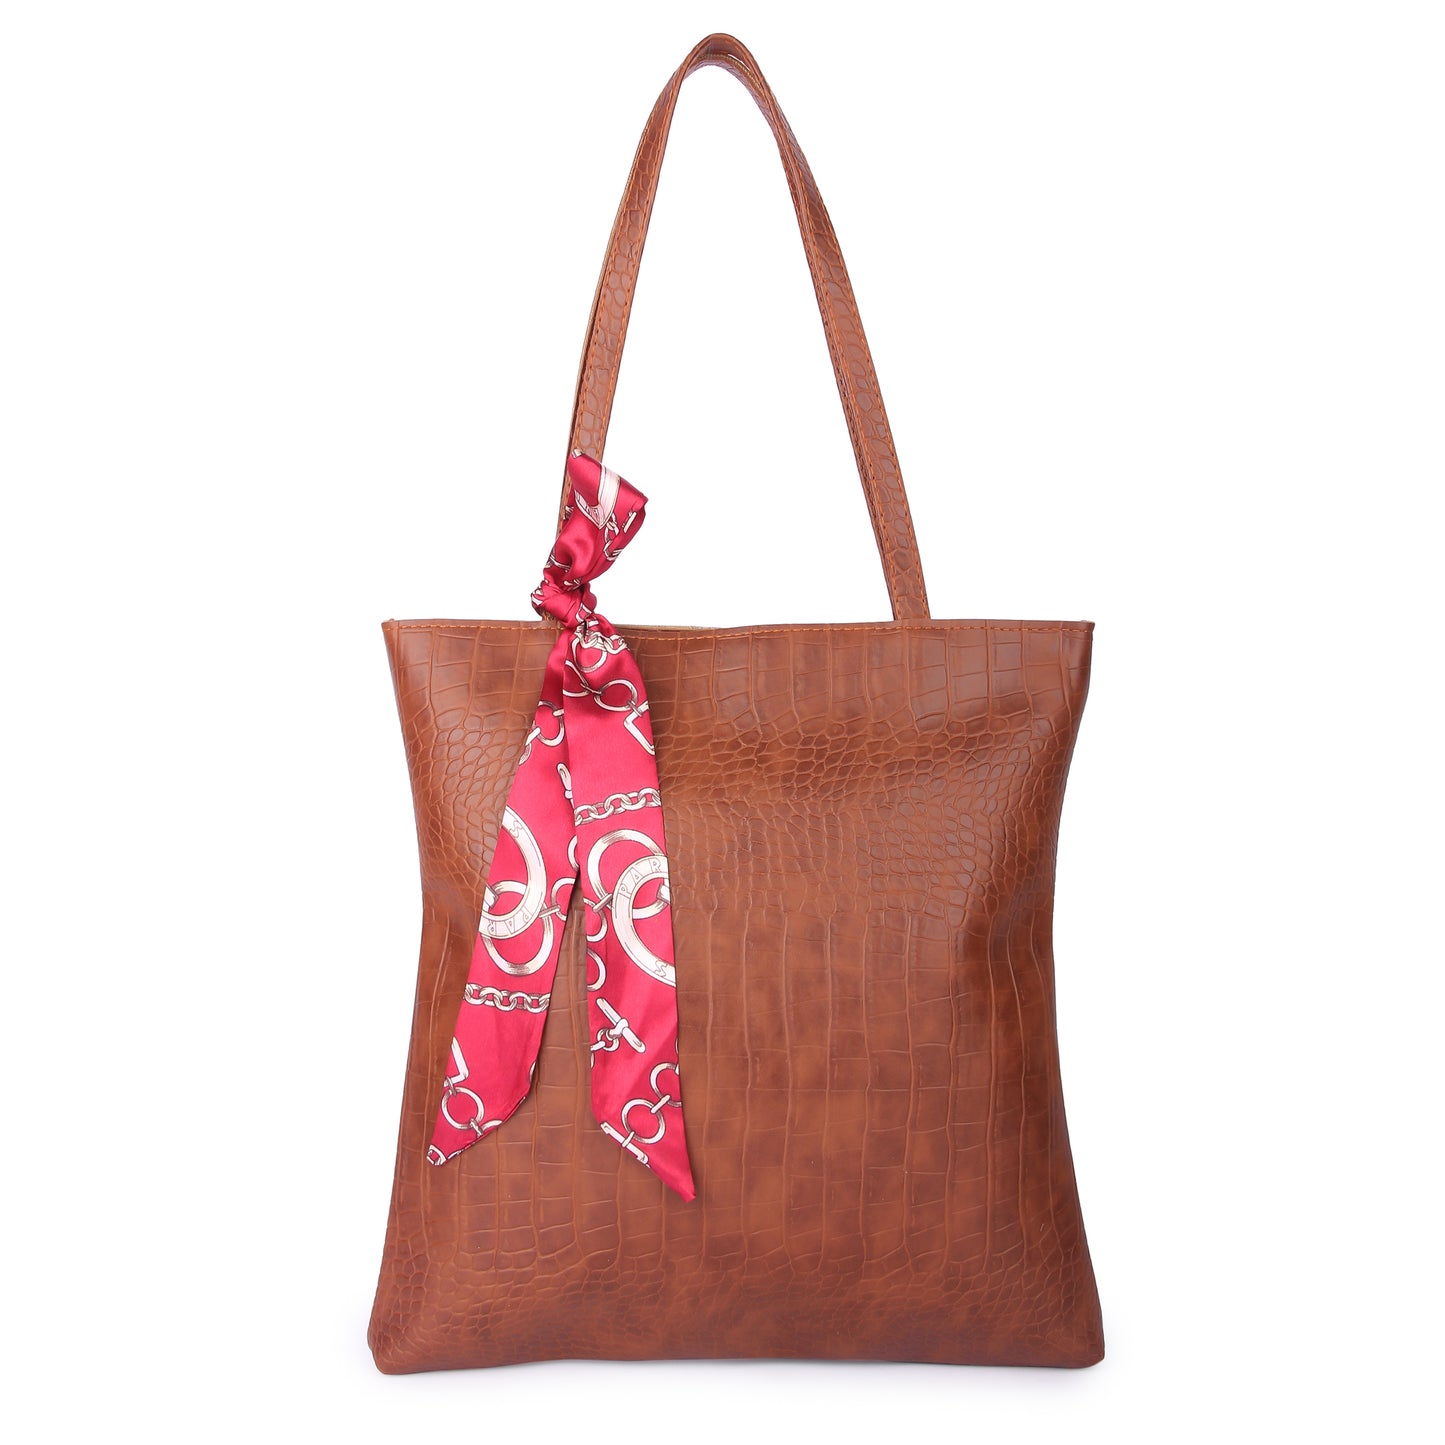 Tote Bags For Women Multi Colour Option